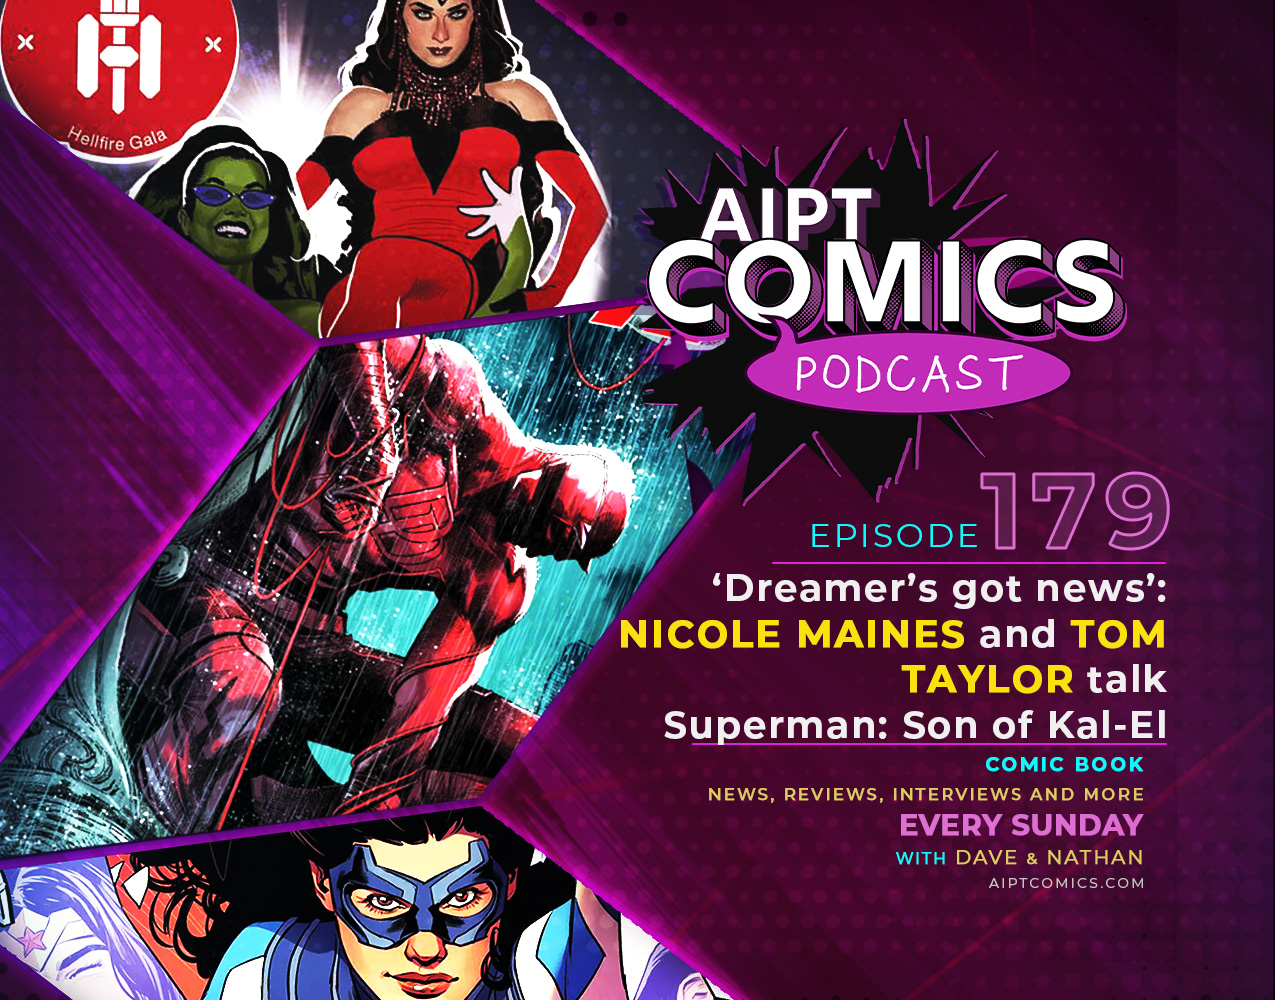 AIPT Comics podcast episode 179: ‘Dreamer’s got news’: Nicole Maines and Tom Taylor talk 'Superman: Son of Kal-El'